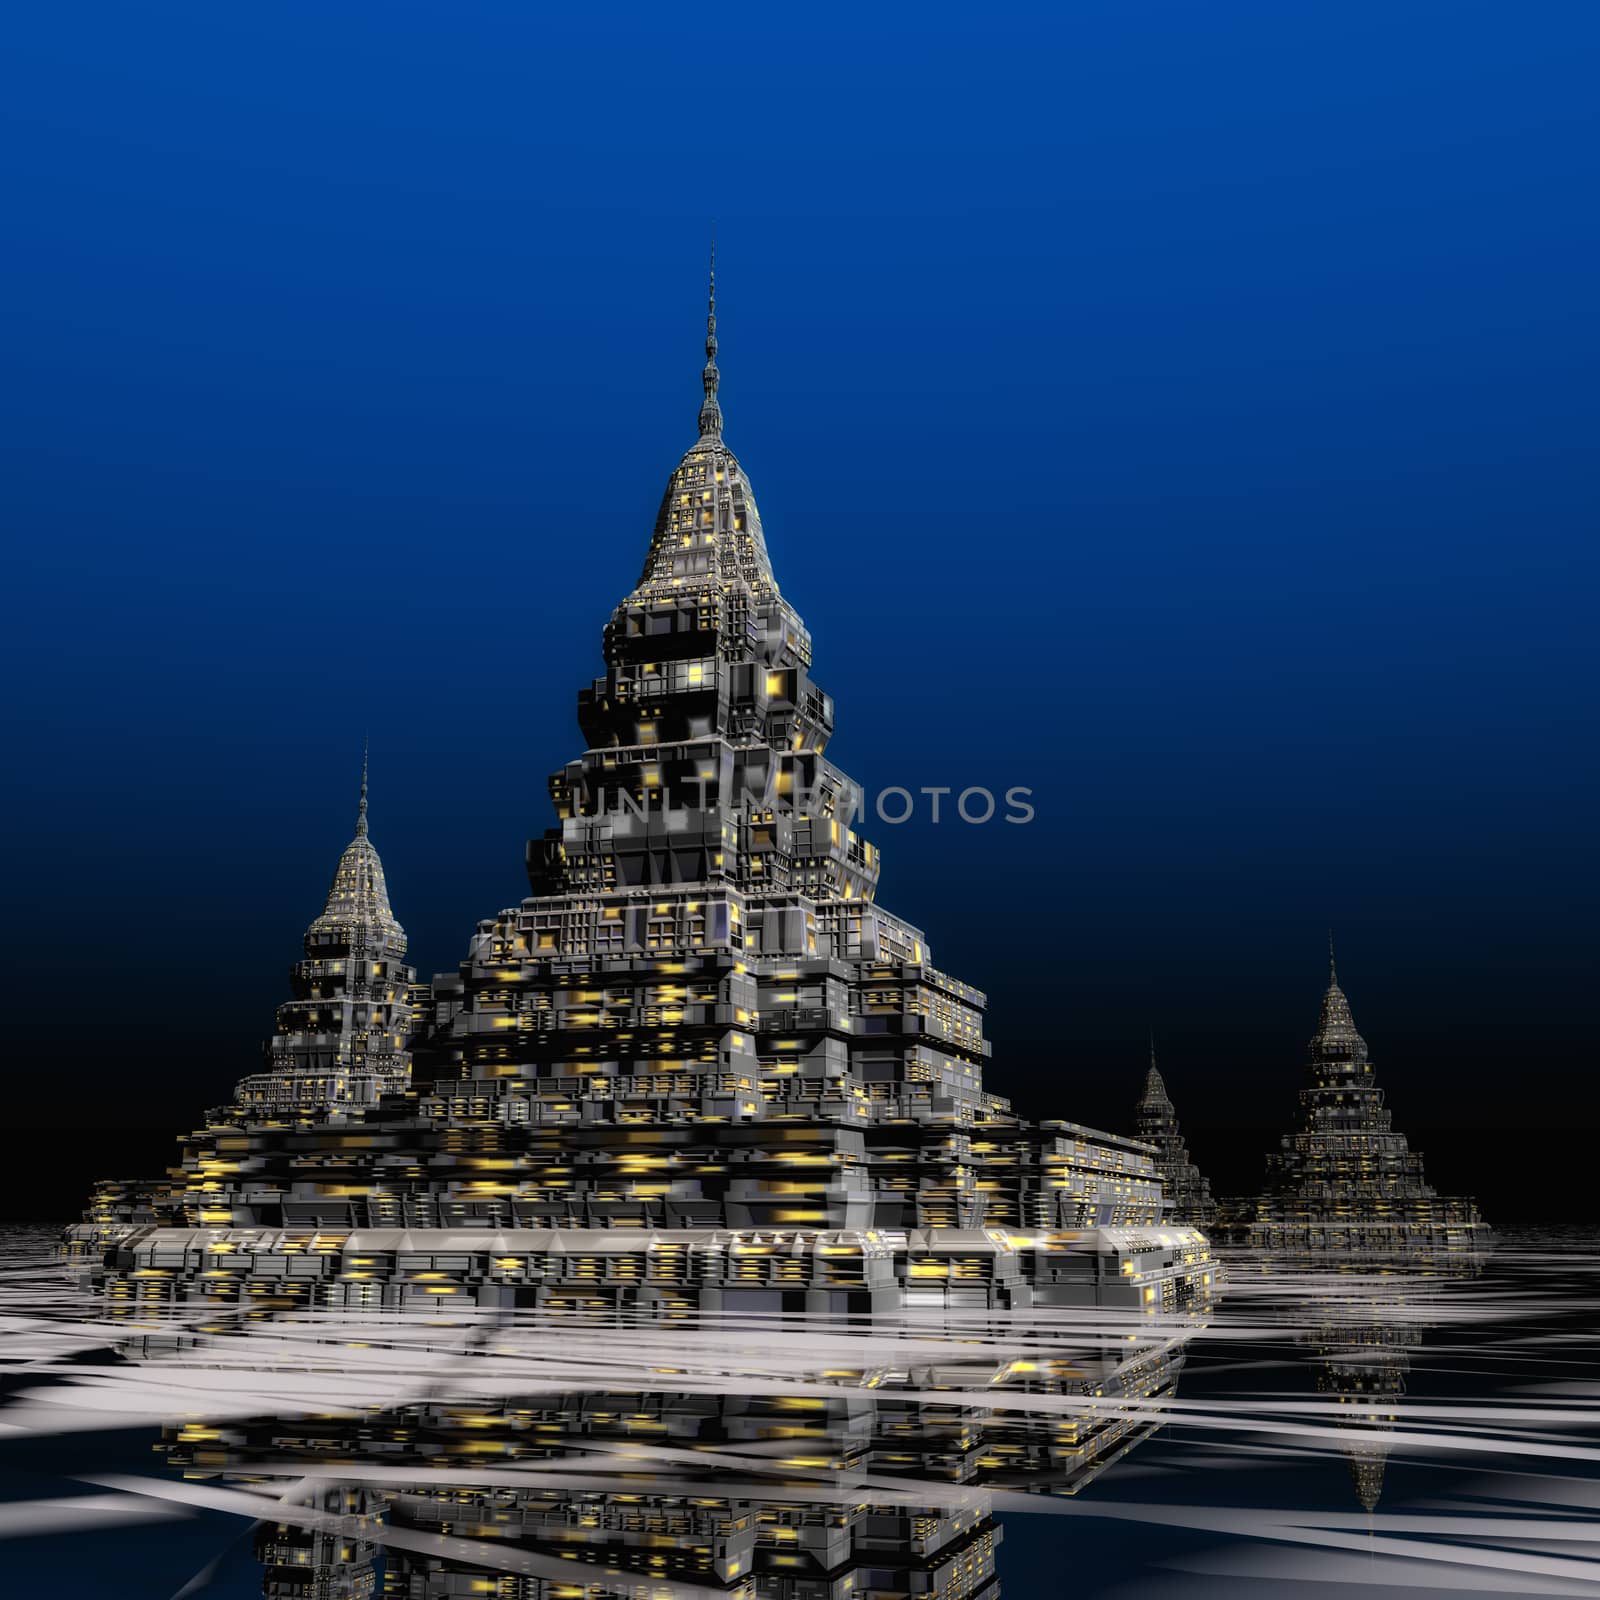 Digital Illustration of a surreal Pagoda